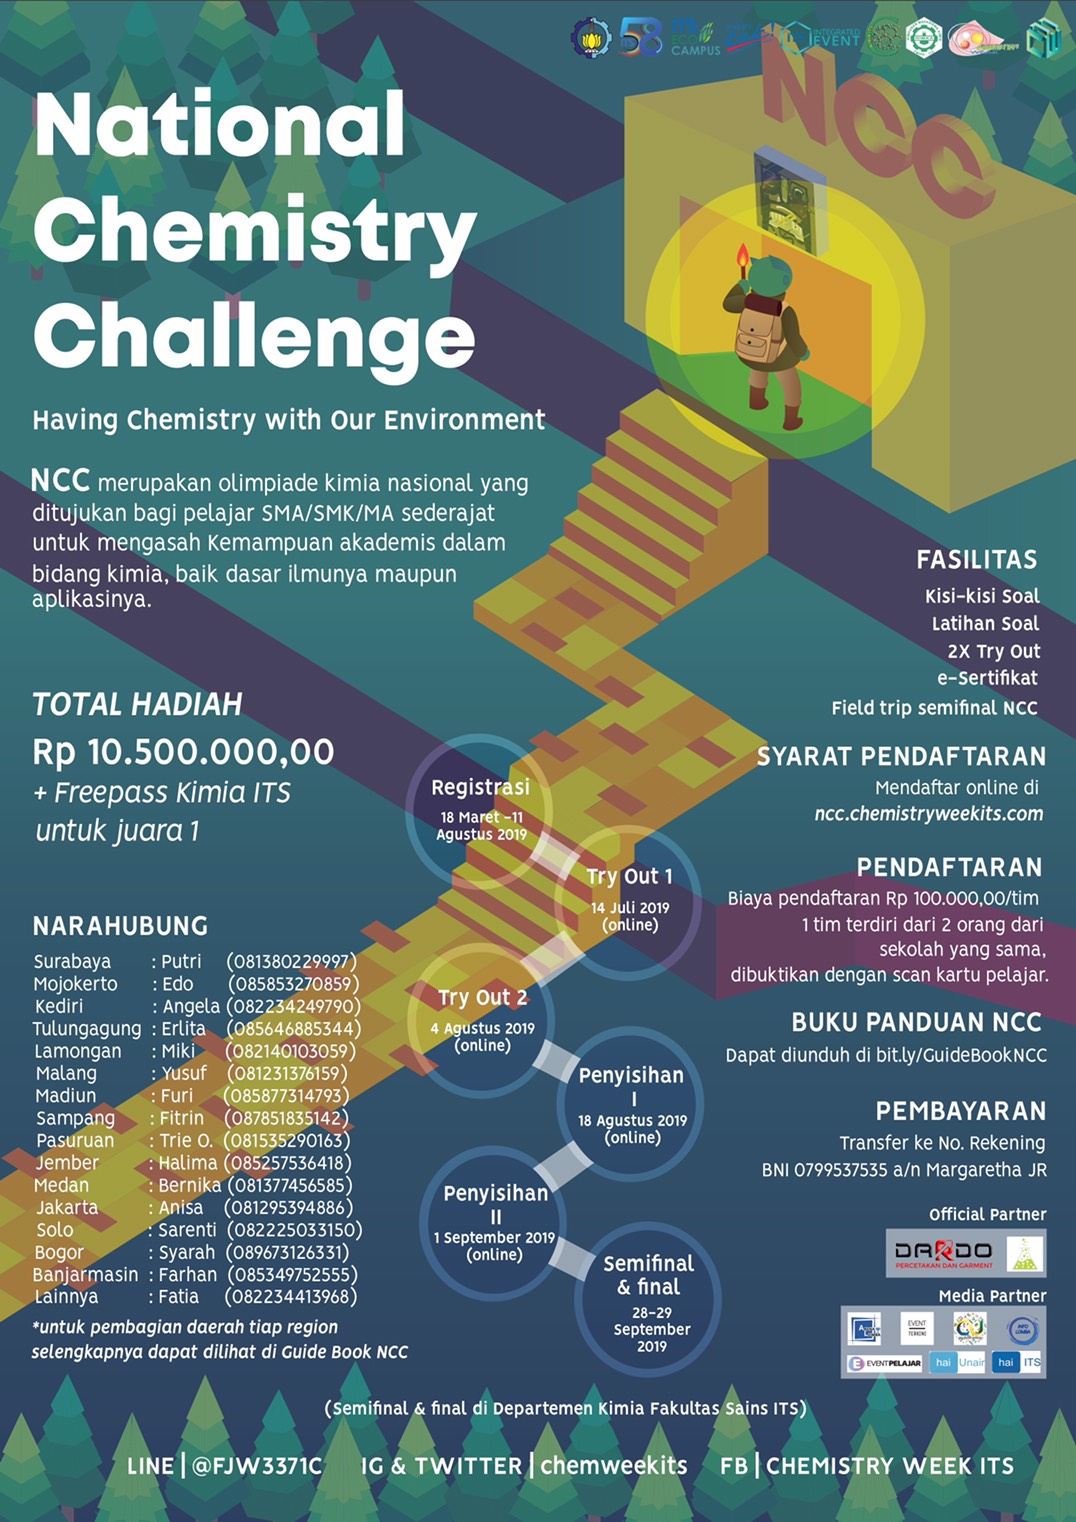 NCC (National Chemistry Challenge) image 1